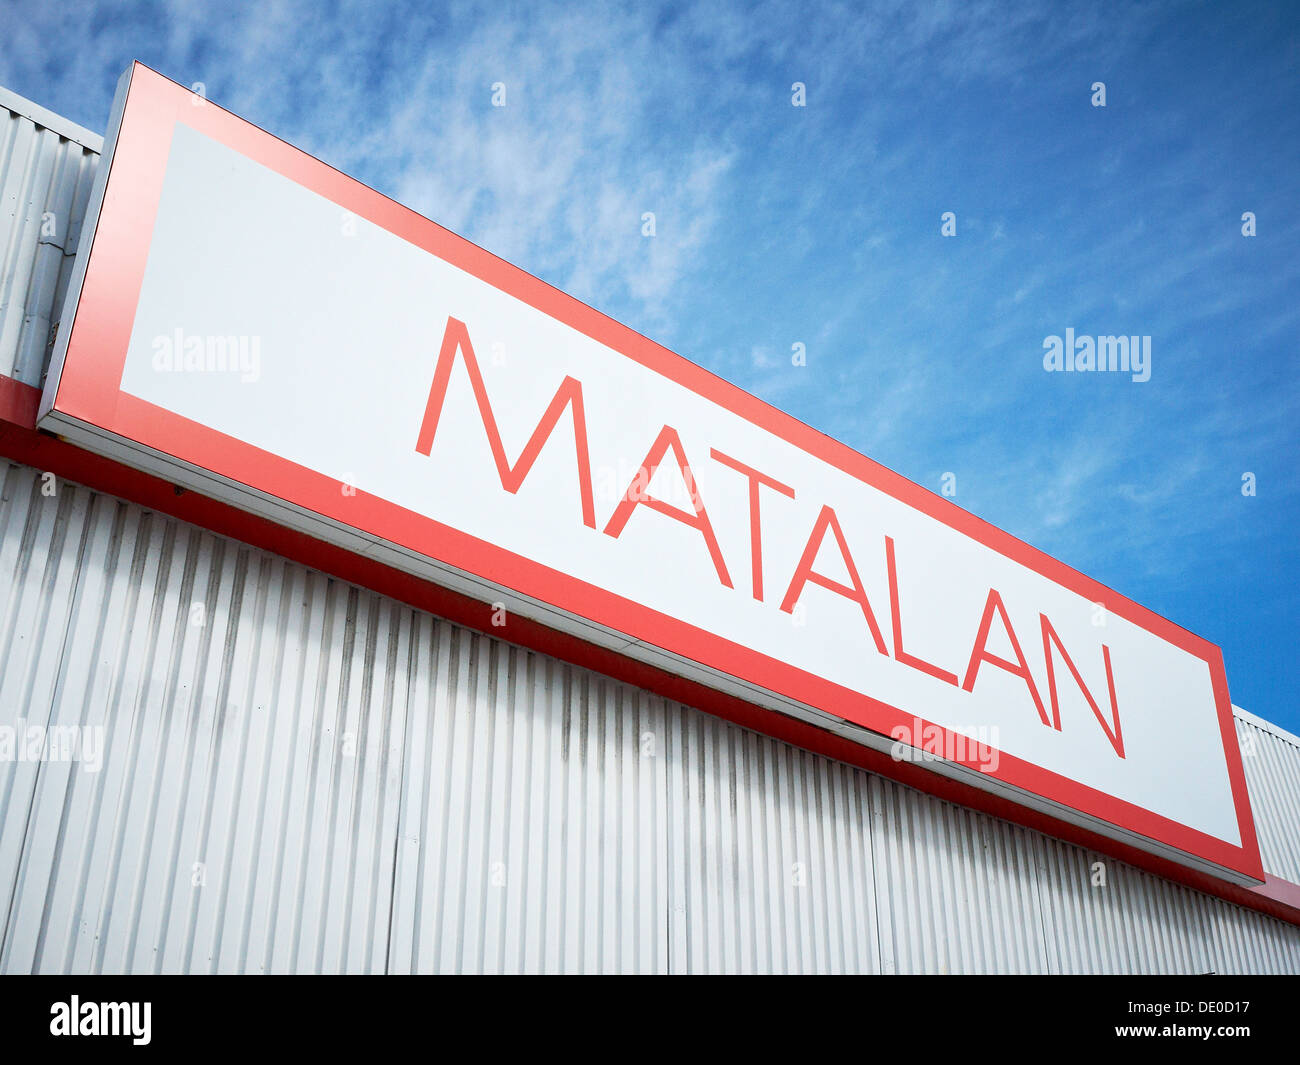 Matalan sign or logo on outside wall UK Stock Photo